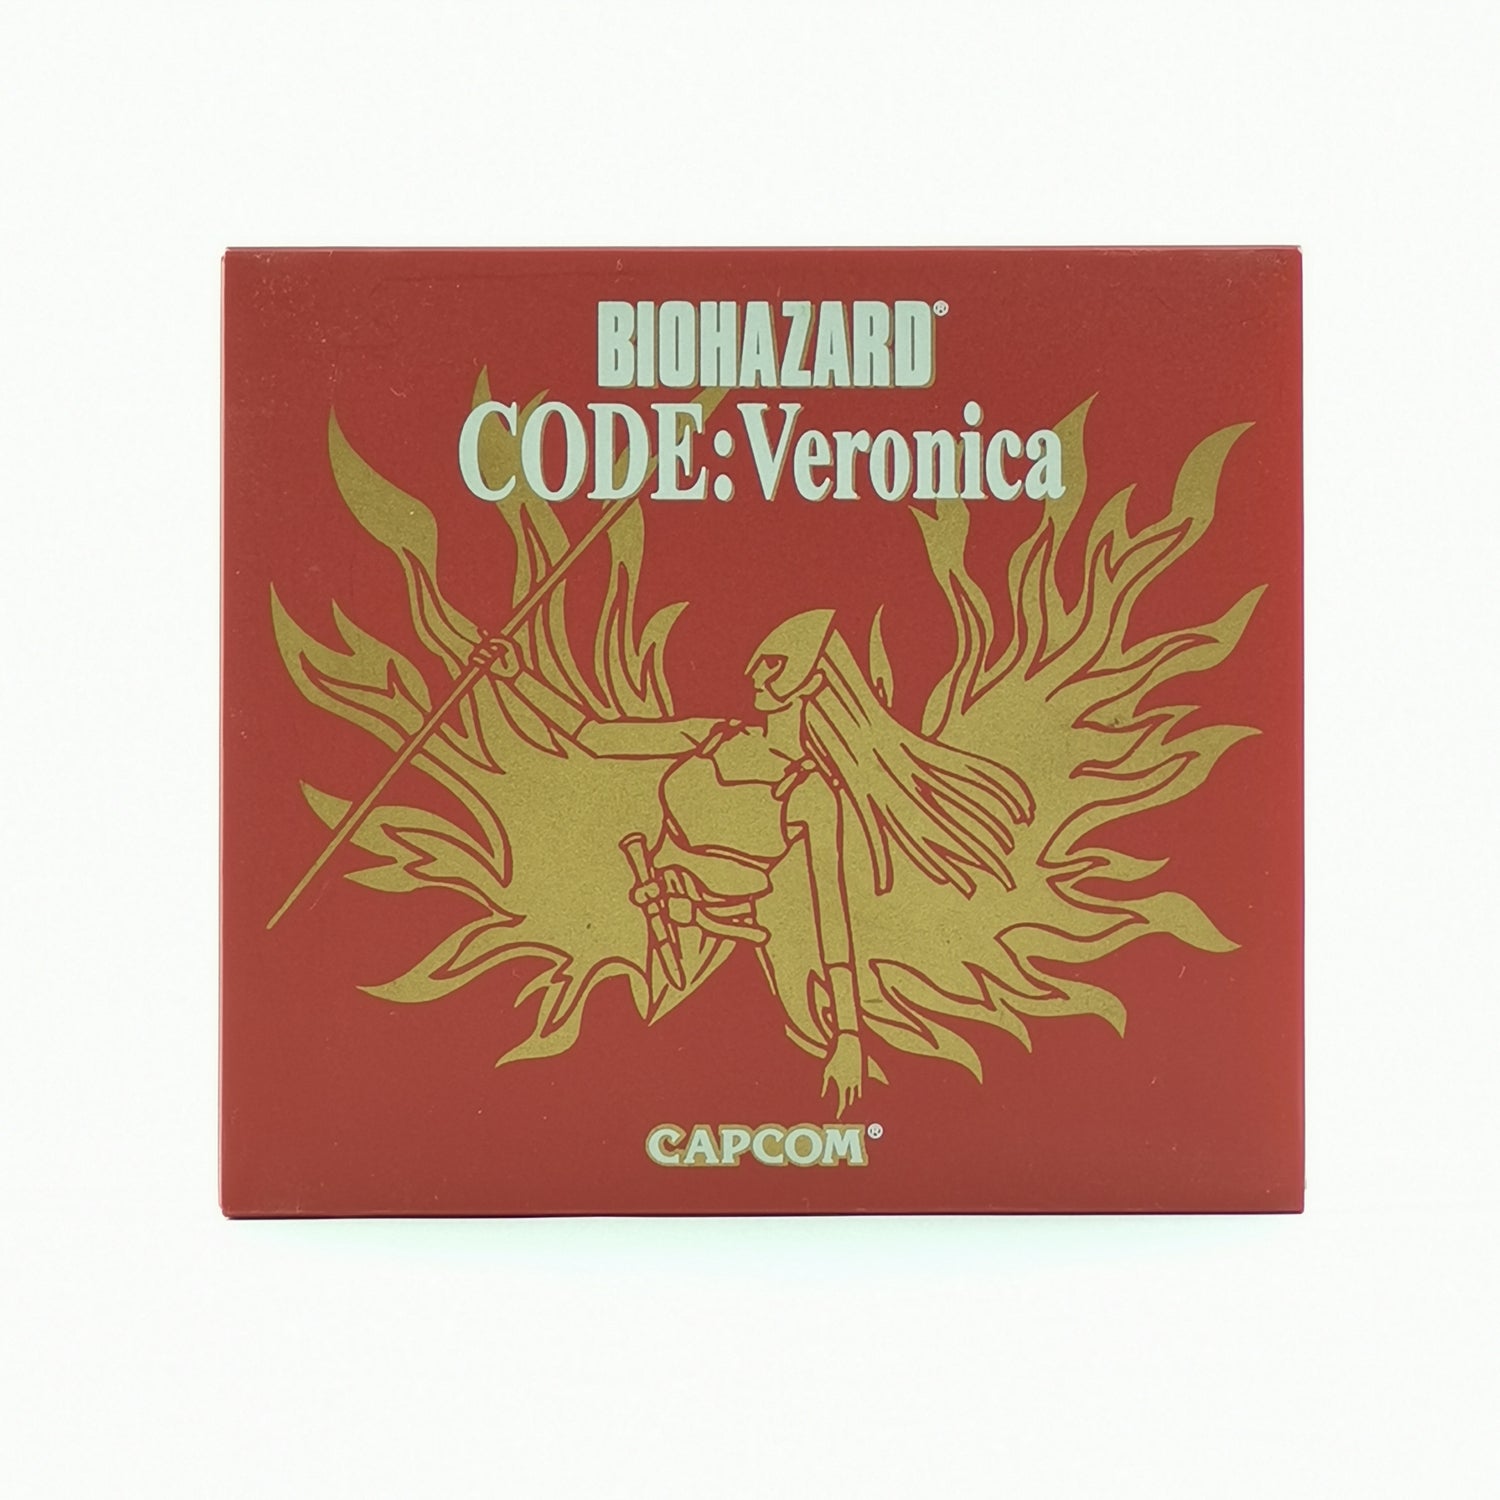 Sega Dreamcast Game: Biohazard CODE: Veronica - OVP Instructions NTSC-J JAPAN DC